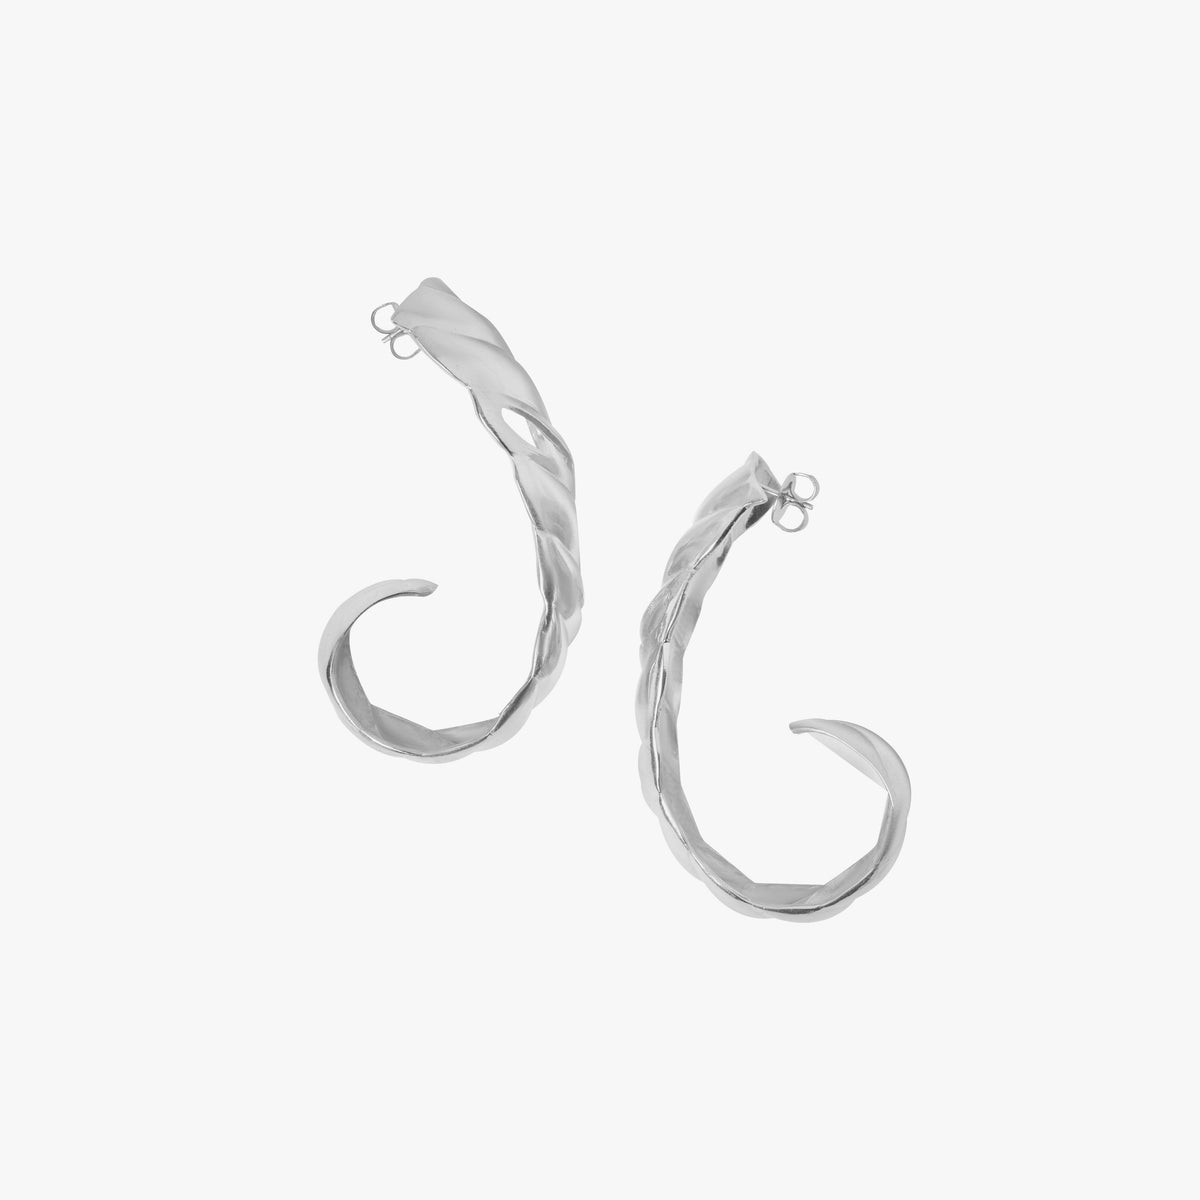 Aqua Swirl Earrings - Silver Tone